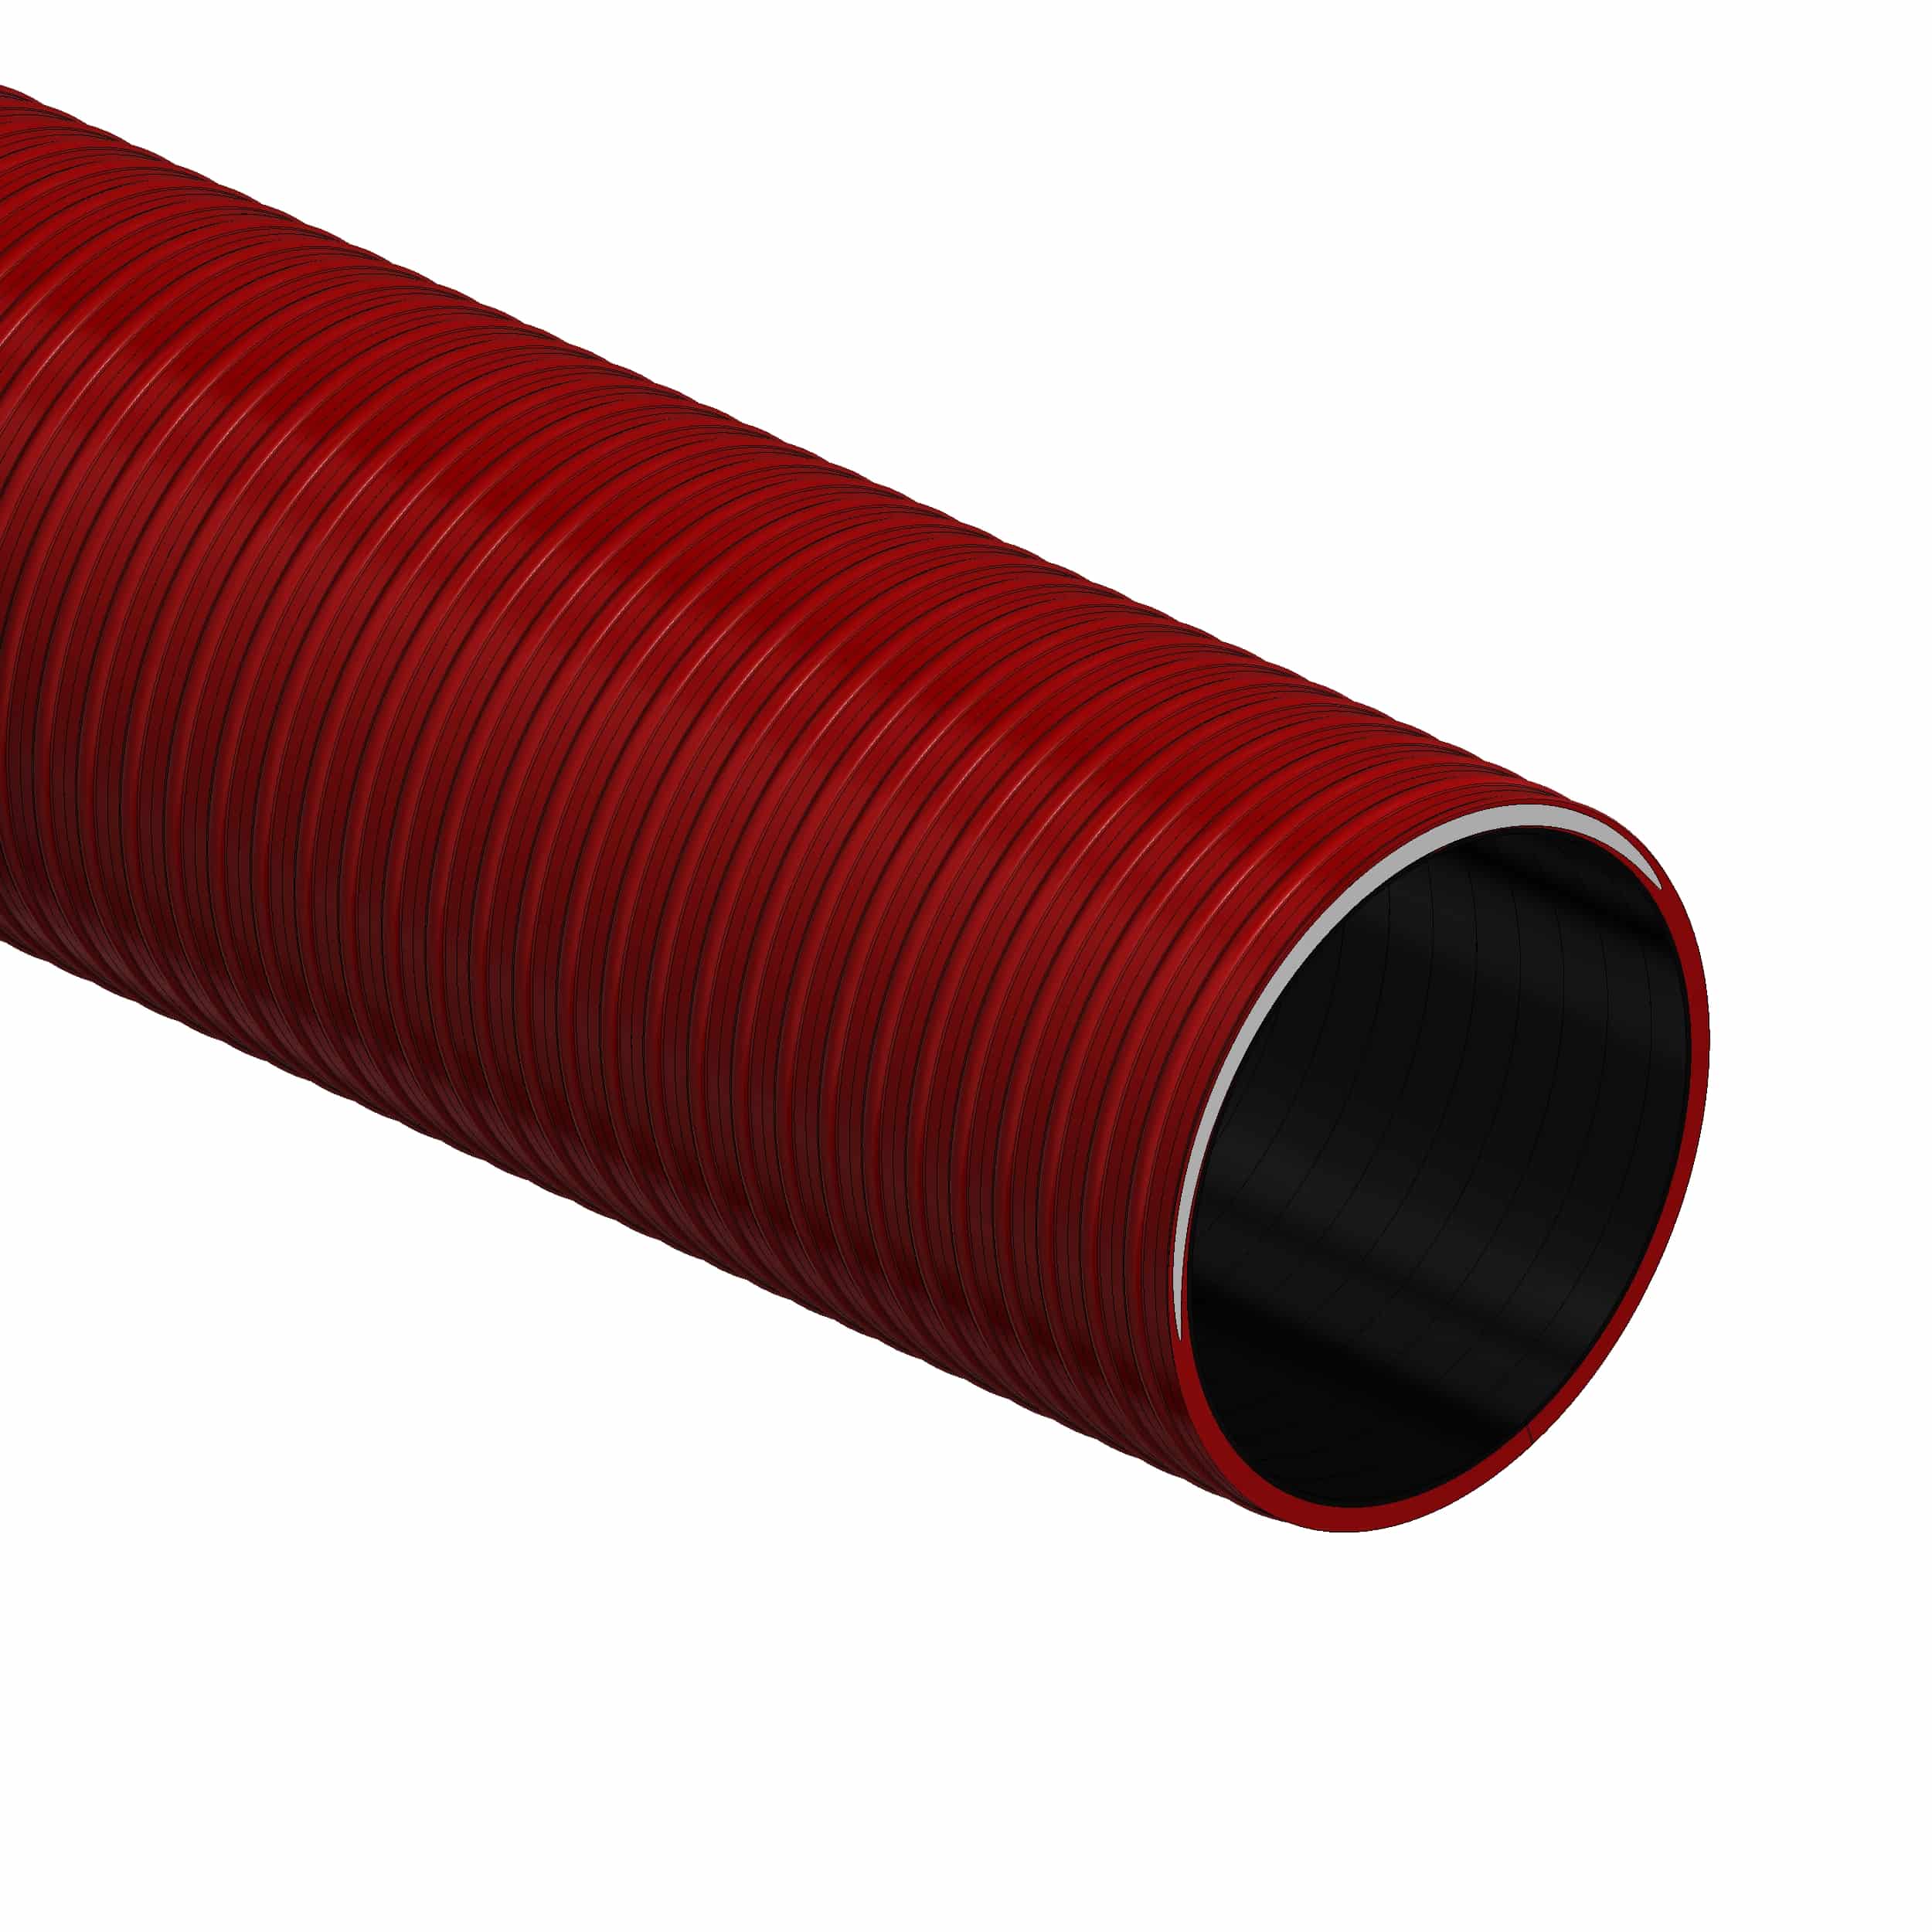 Kabel-Schutz-System KSS110 21000 mm